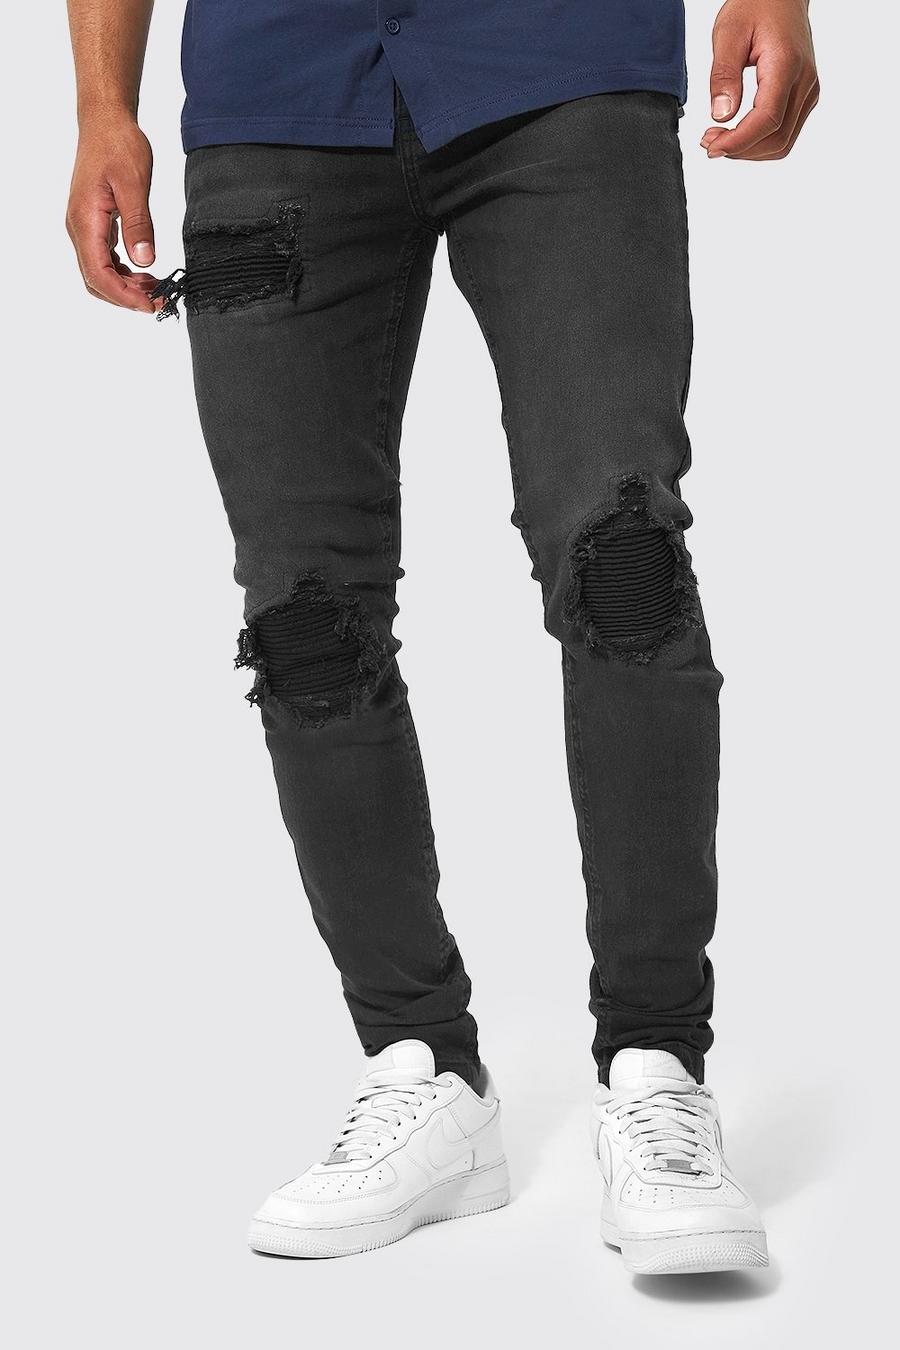 Black Tall Skinny Jeans With Biker Rip And Repair